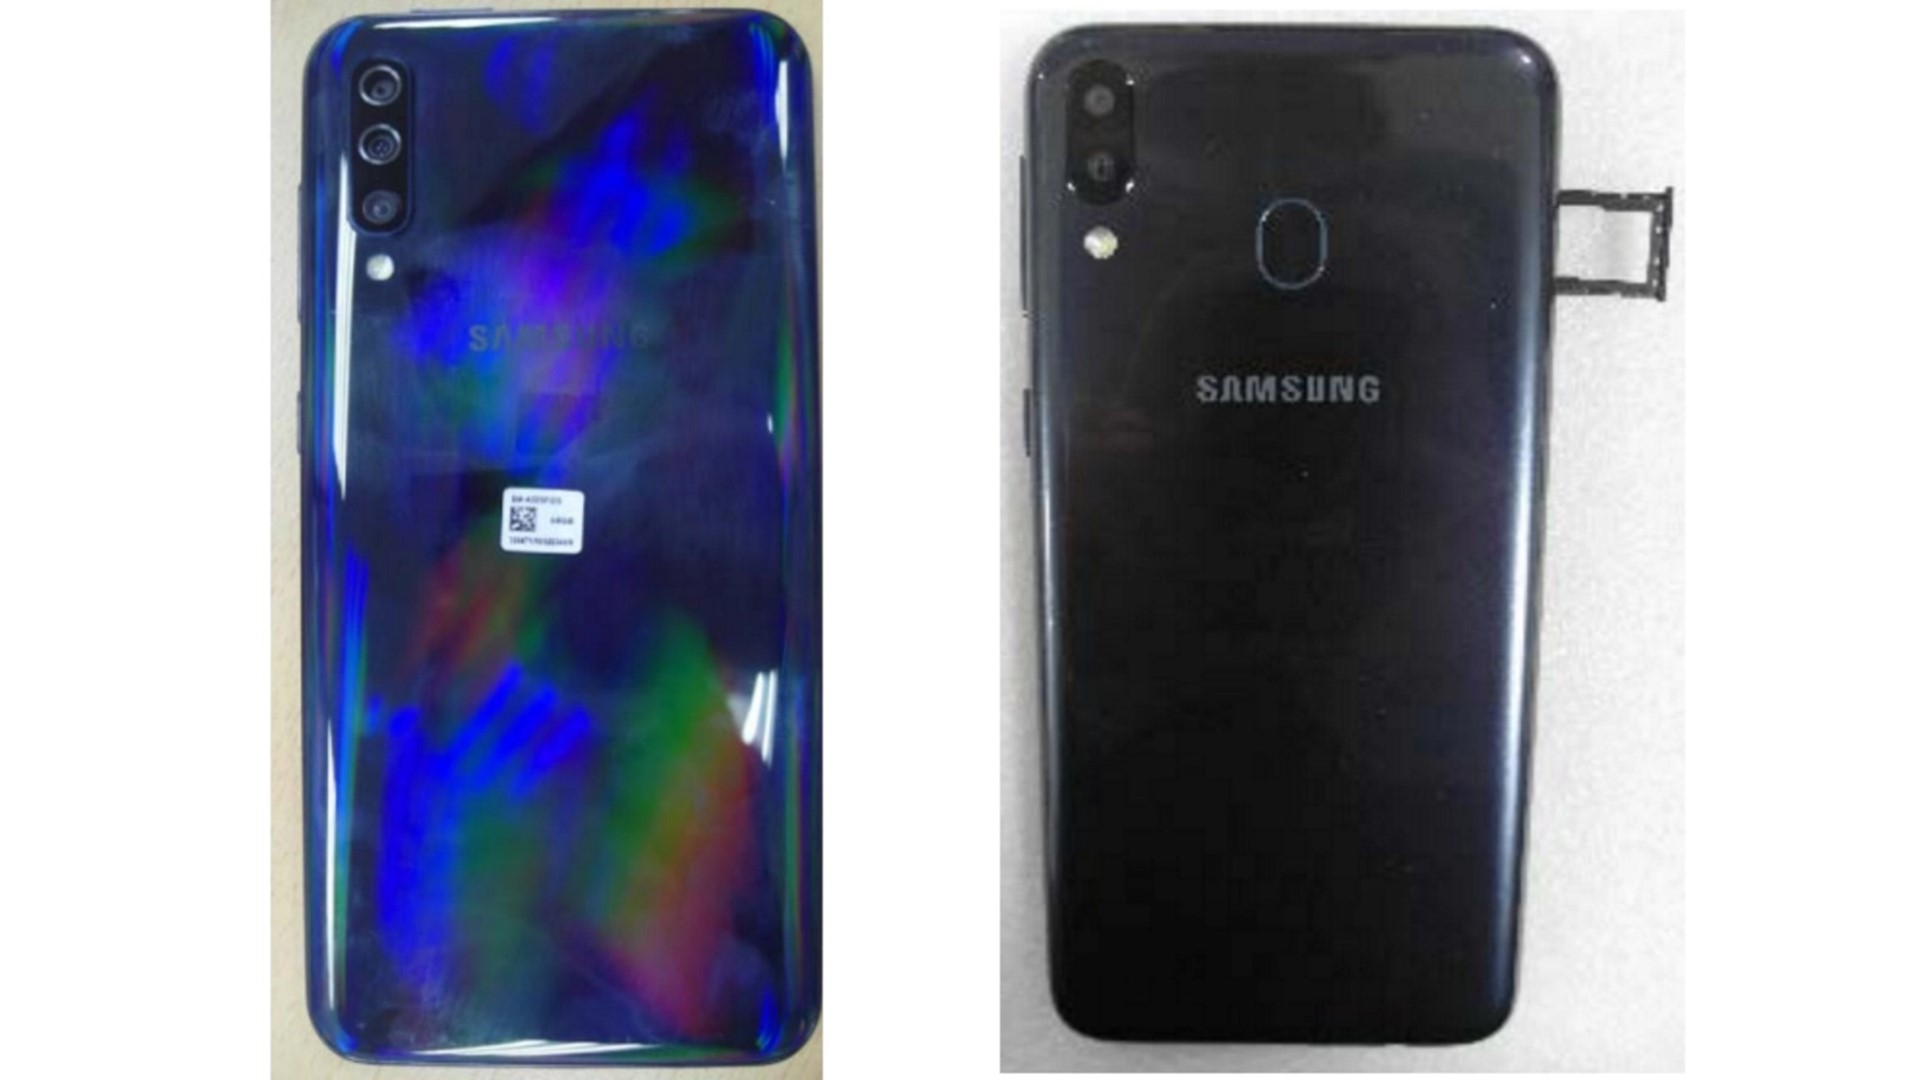 Samsung Galaxy A30 Look - HD Wallpaper 